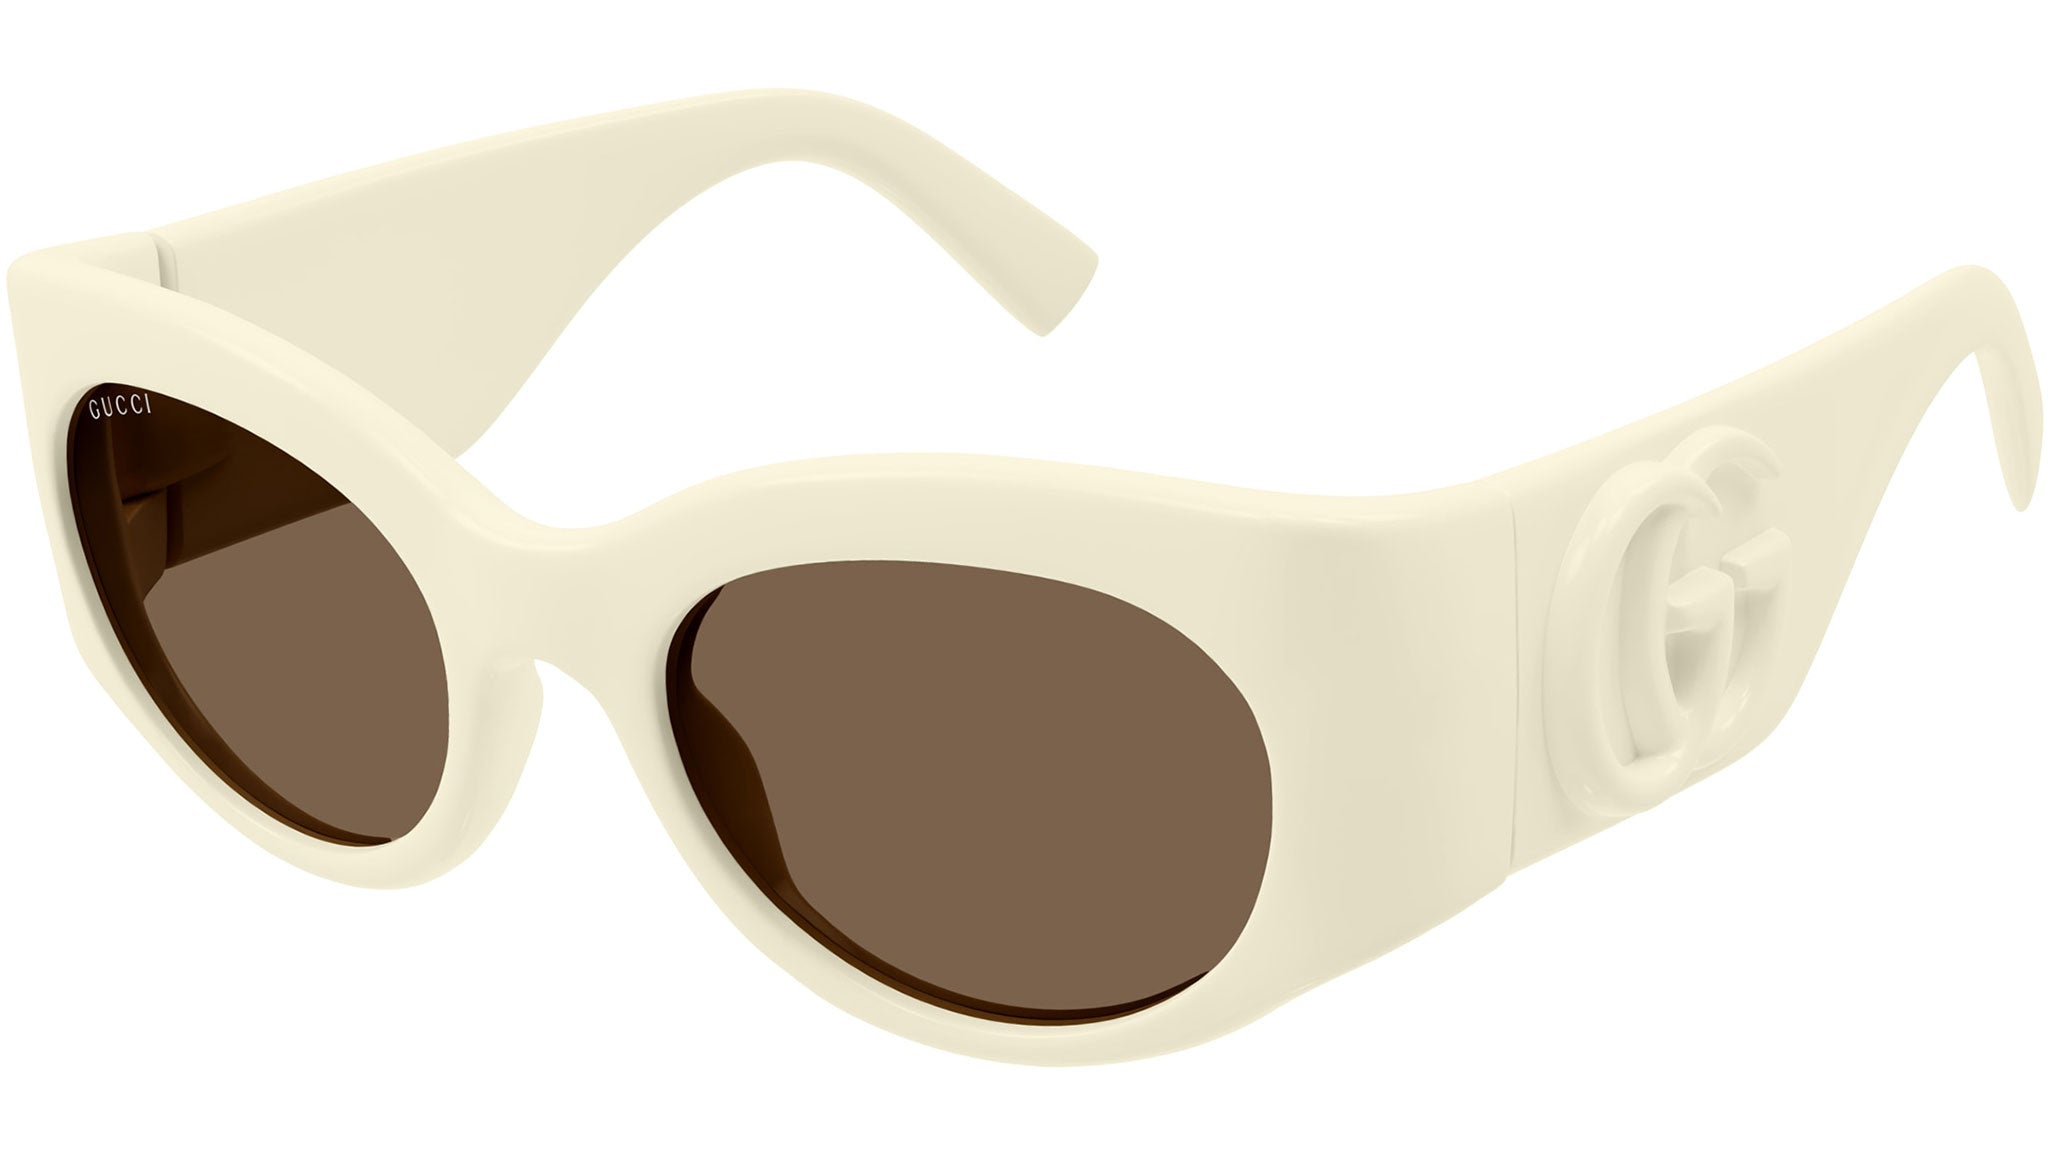 Gucci Wrapped Oval Frame Sunglasses Black (755263 J0741 1012)